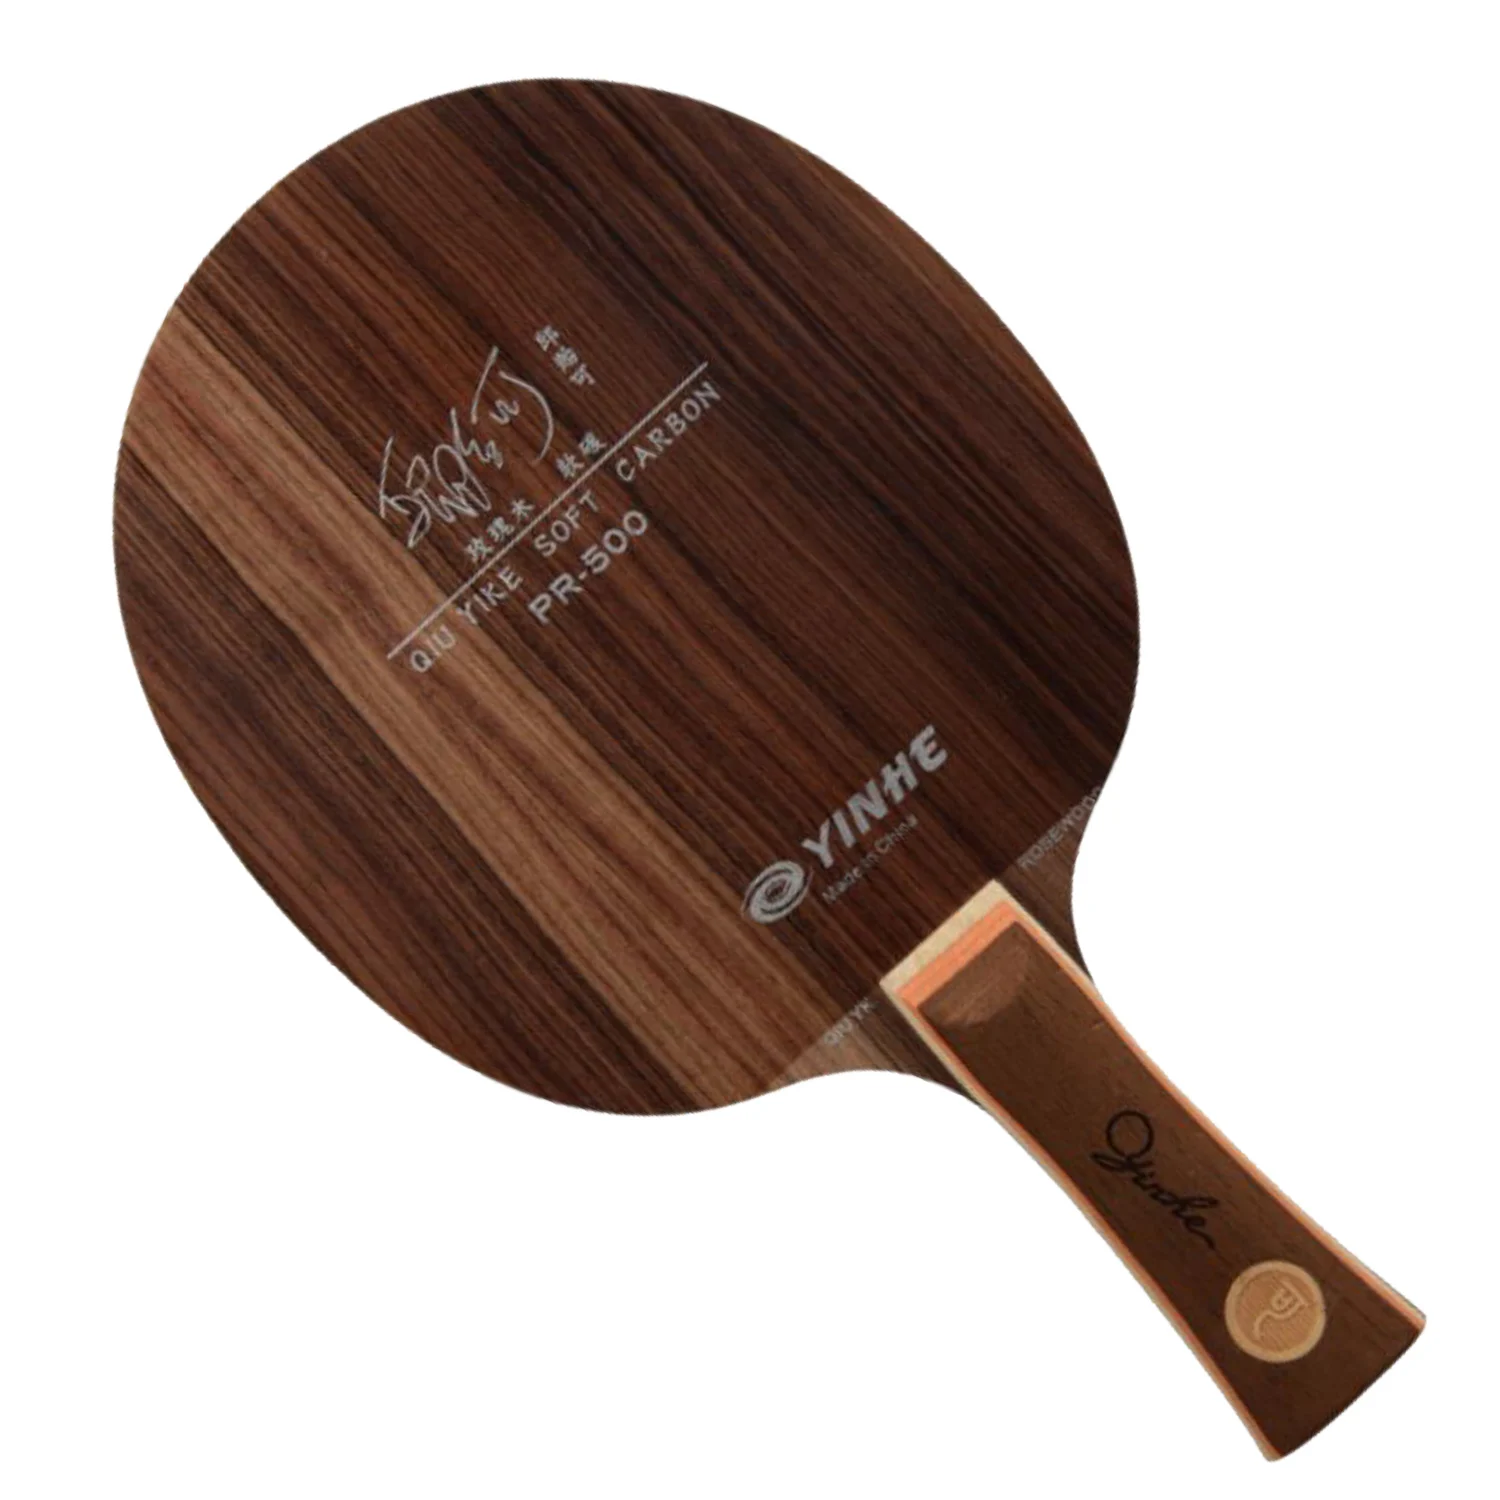 Yinhe Qiu yike Populace Rosewood table tennis blade PR-500